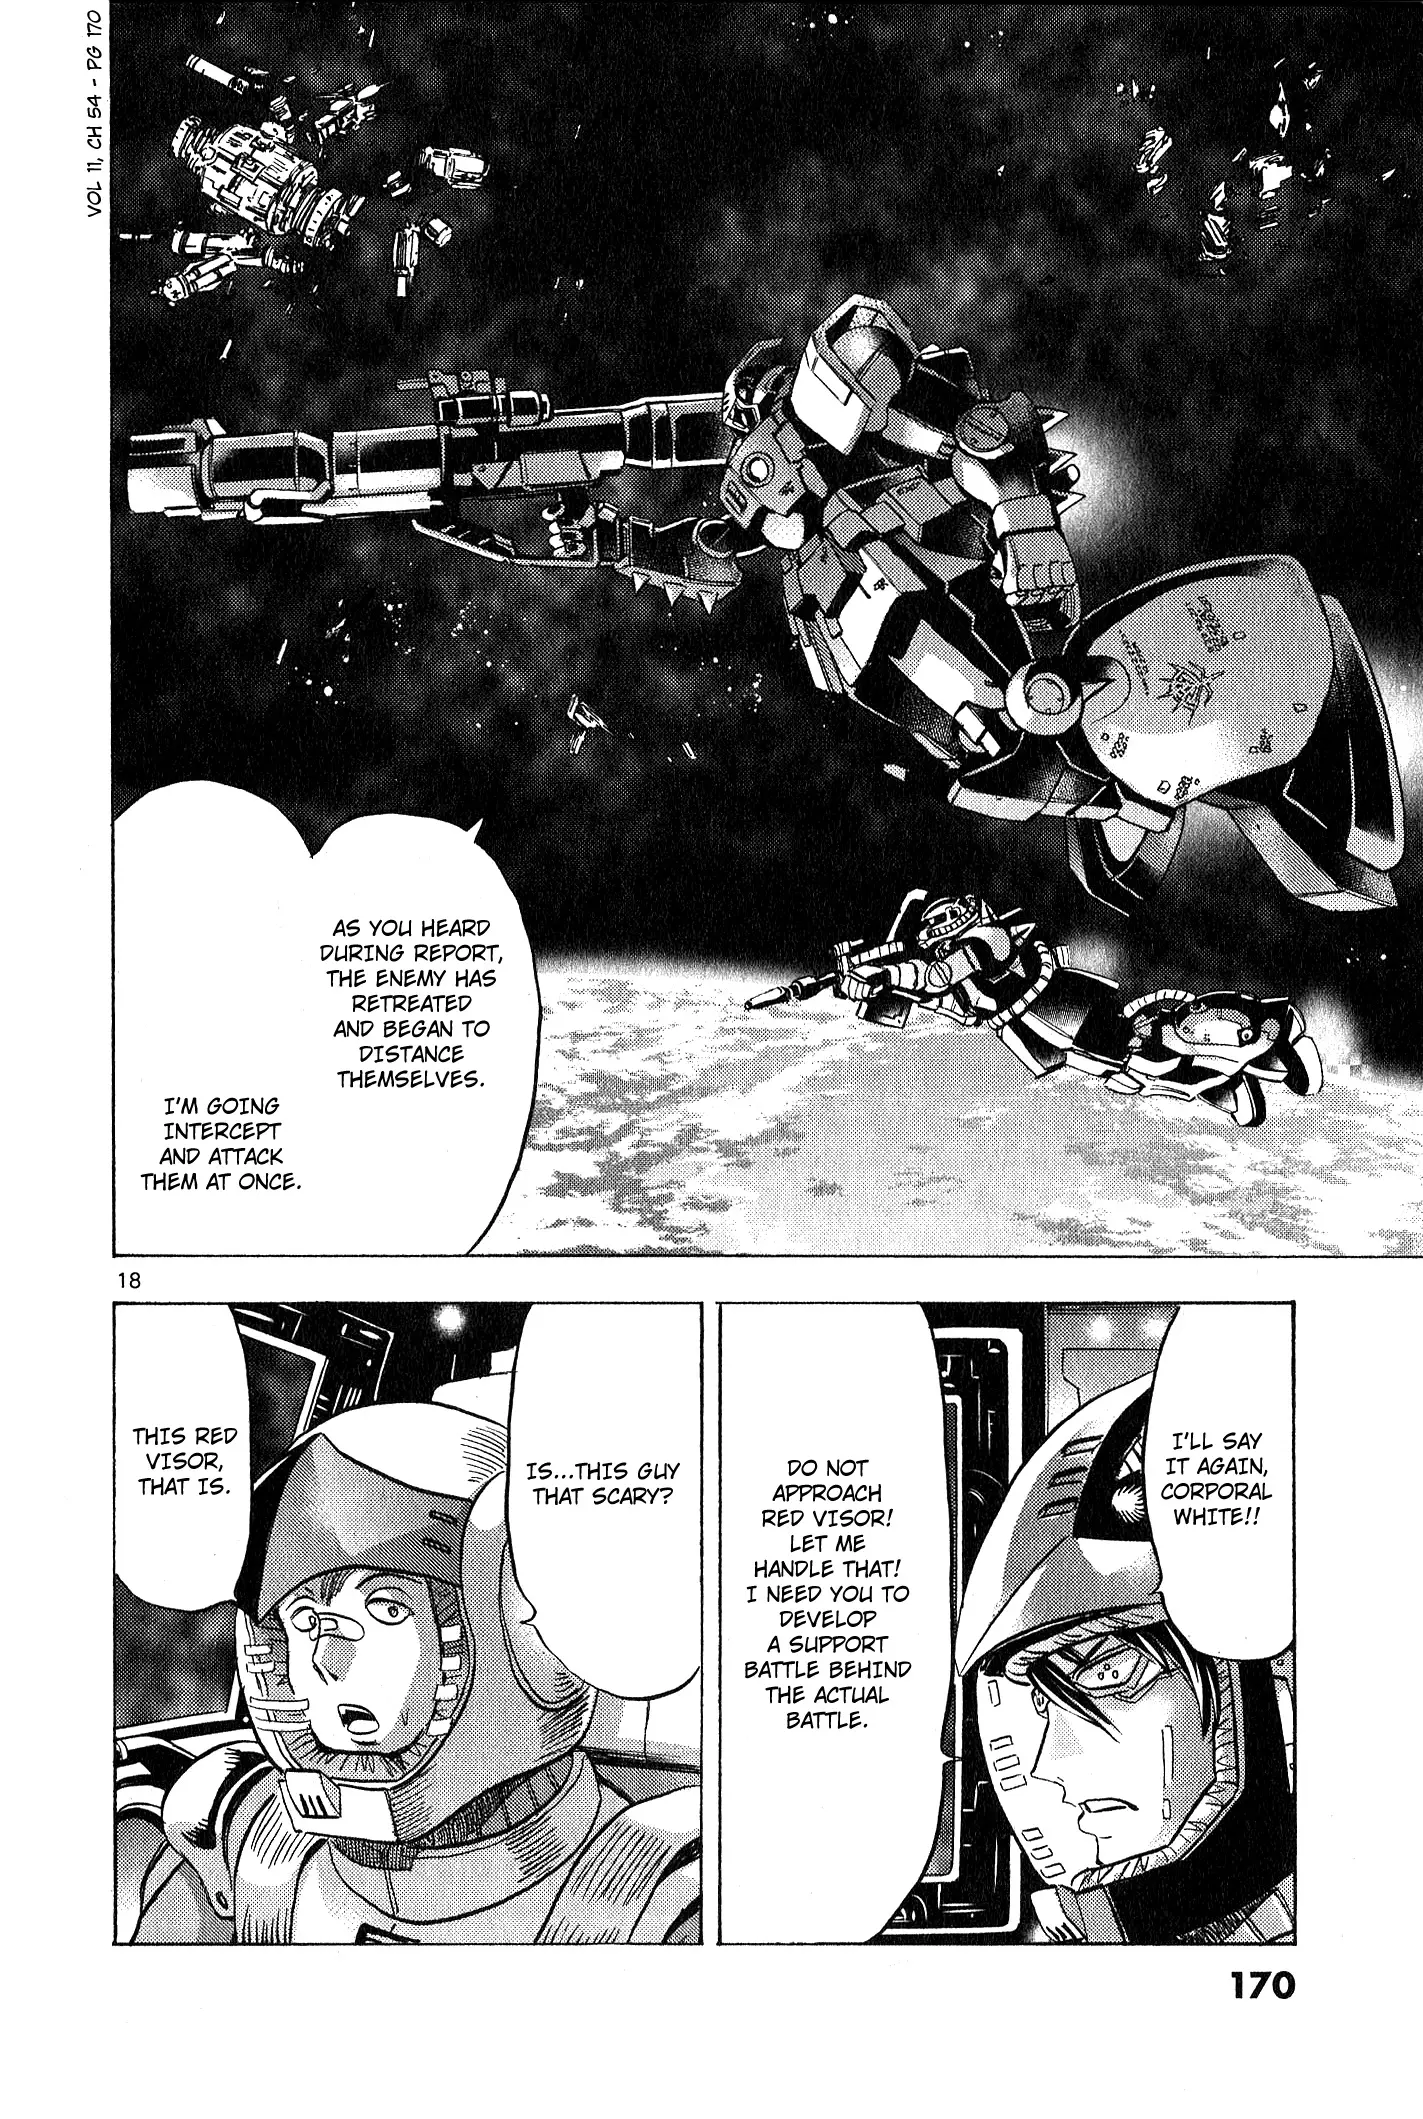 Mobile Suit Gundam Aggressor - 54 page 18-75998a77